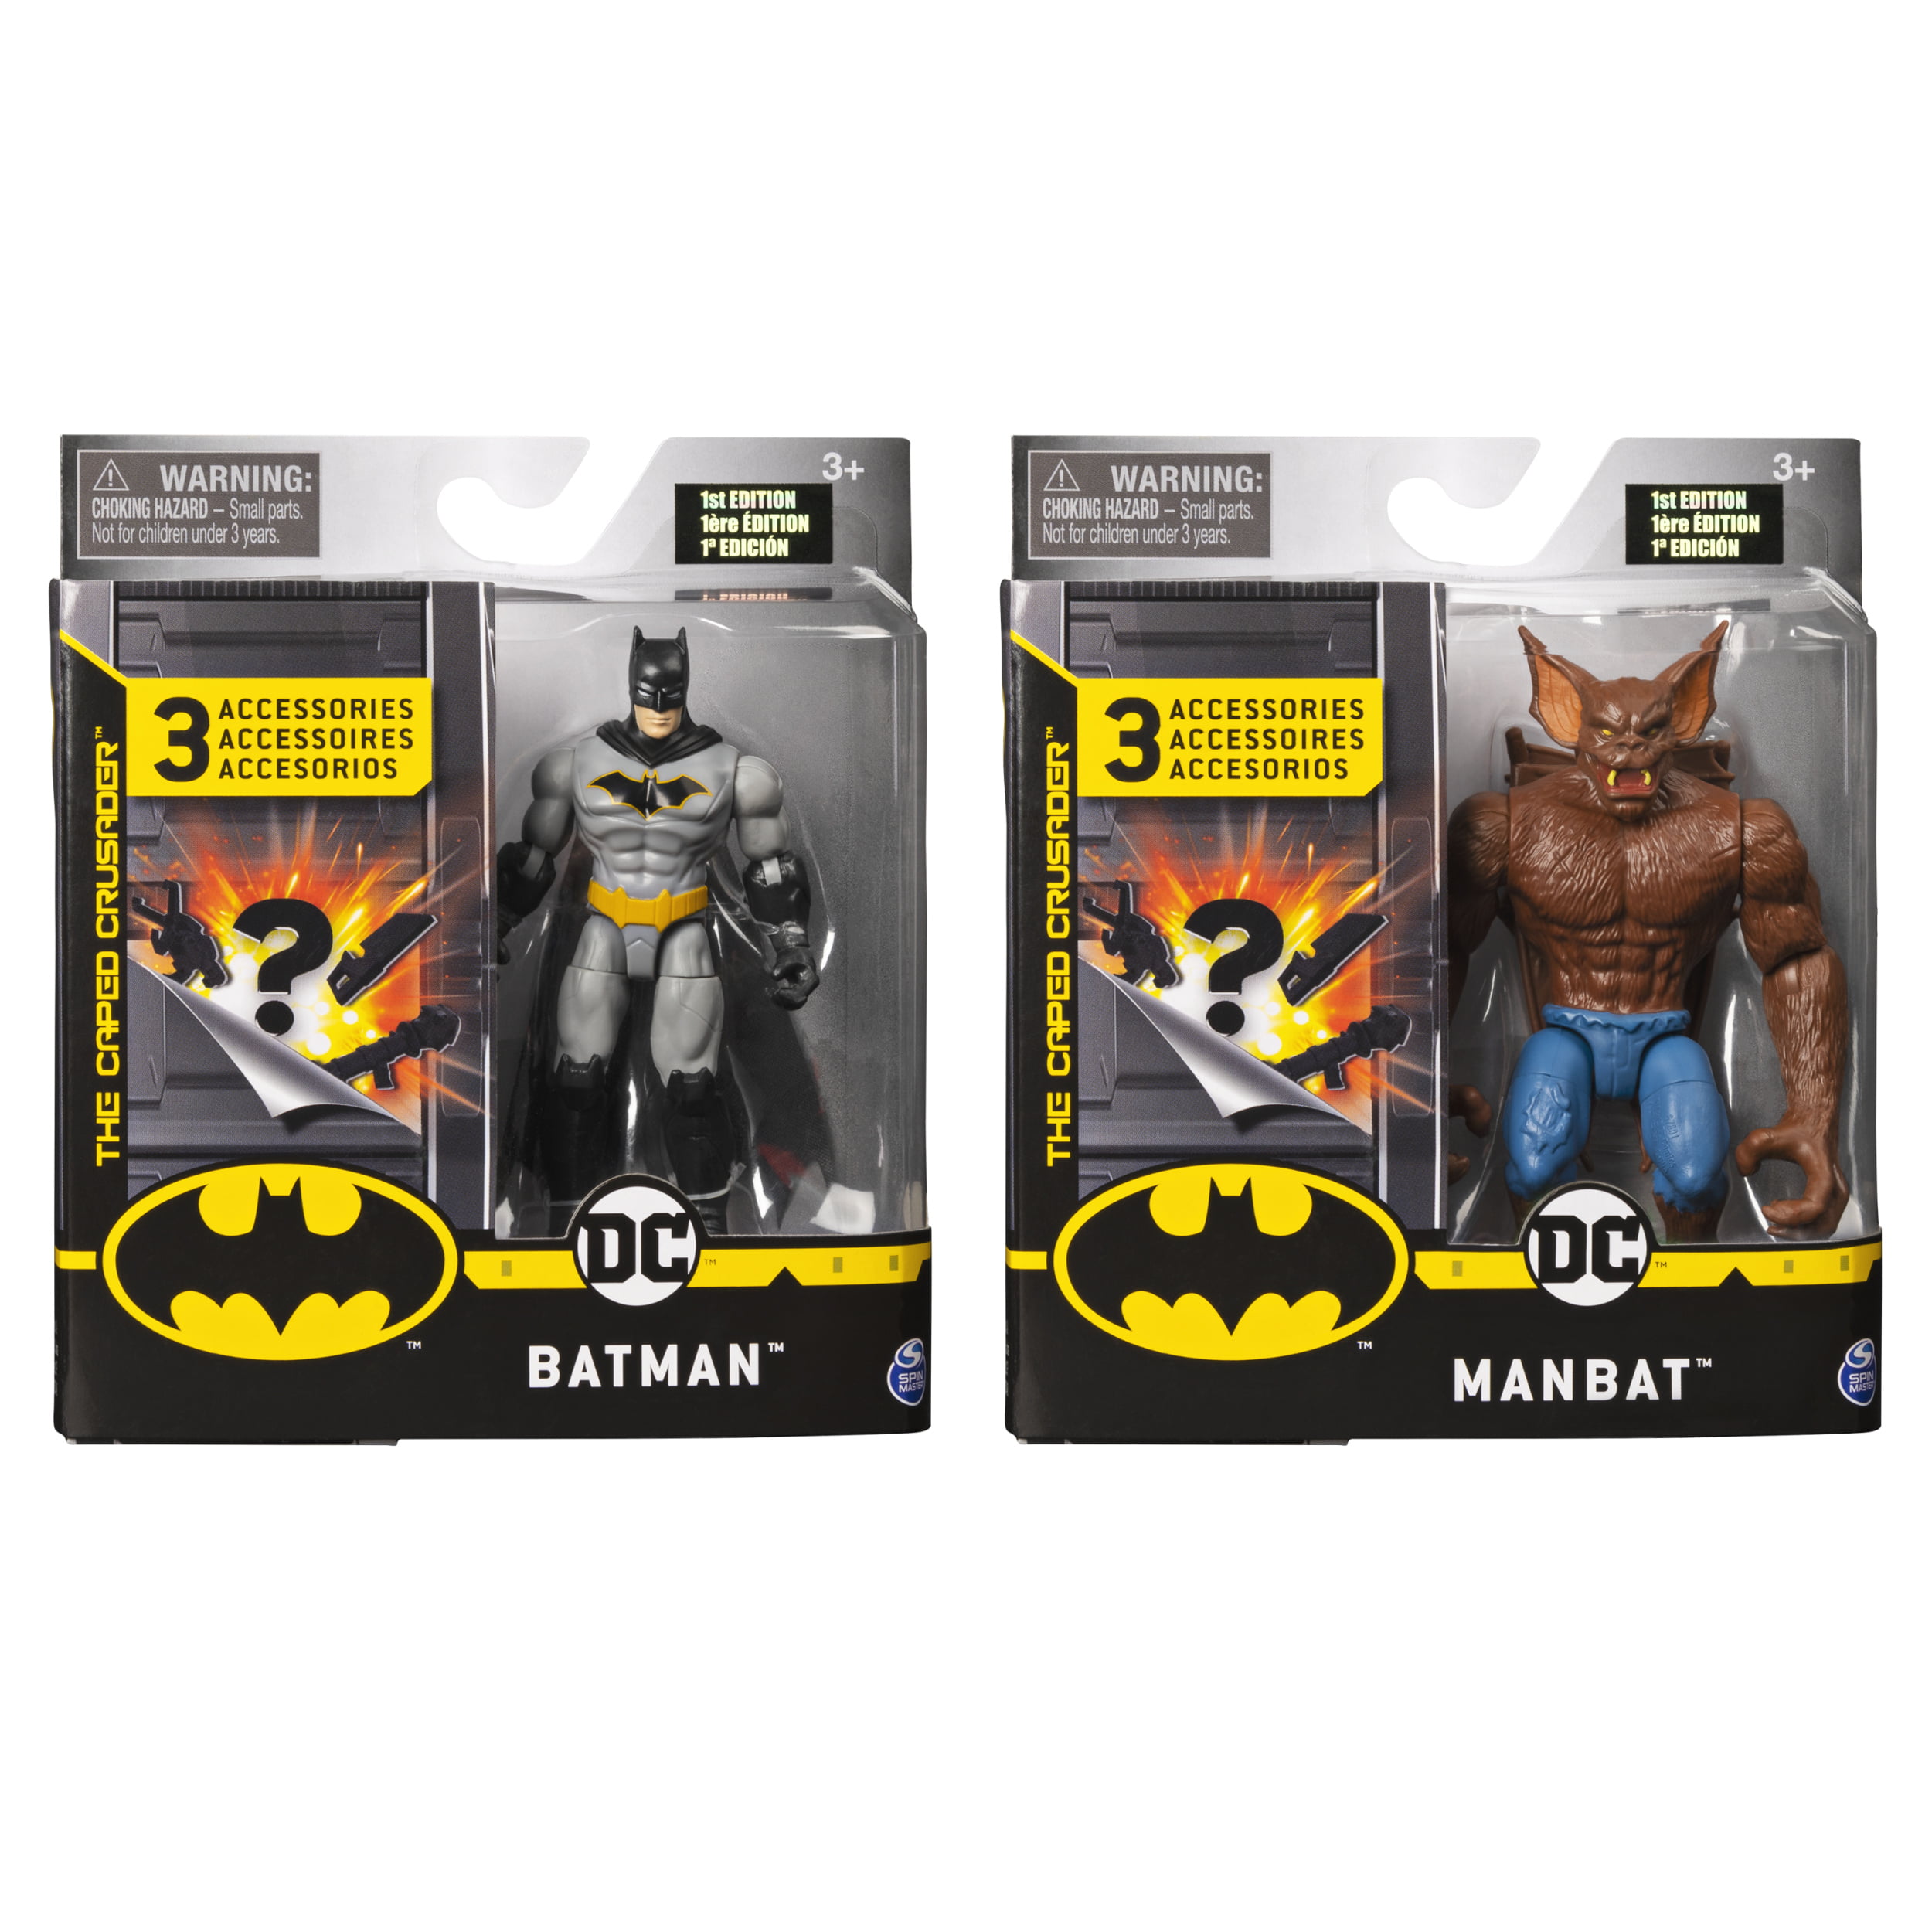 Fisher Price Imaginext Dc Super Friends Manbat NEW Man BAT Batman Justice League 